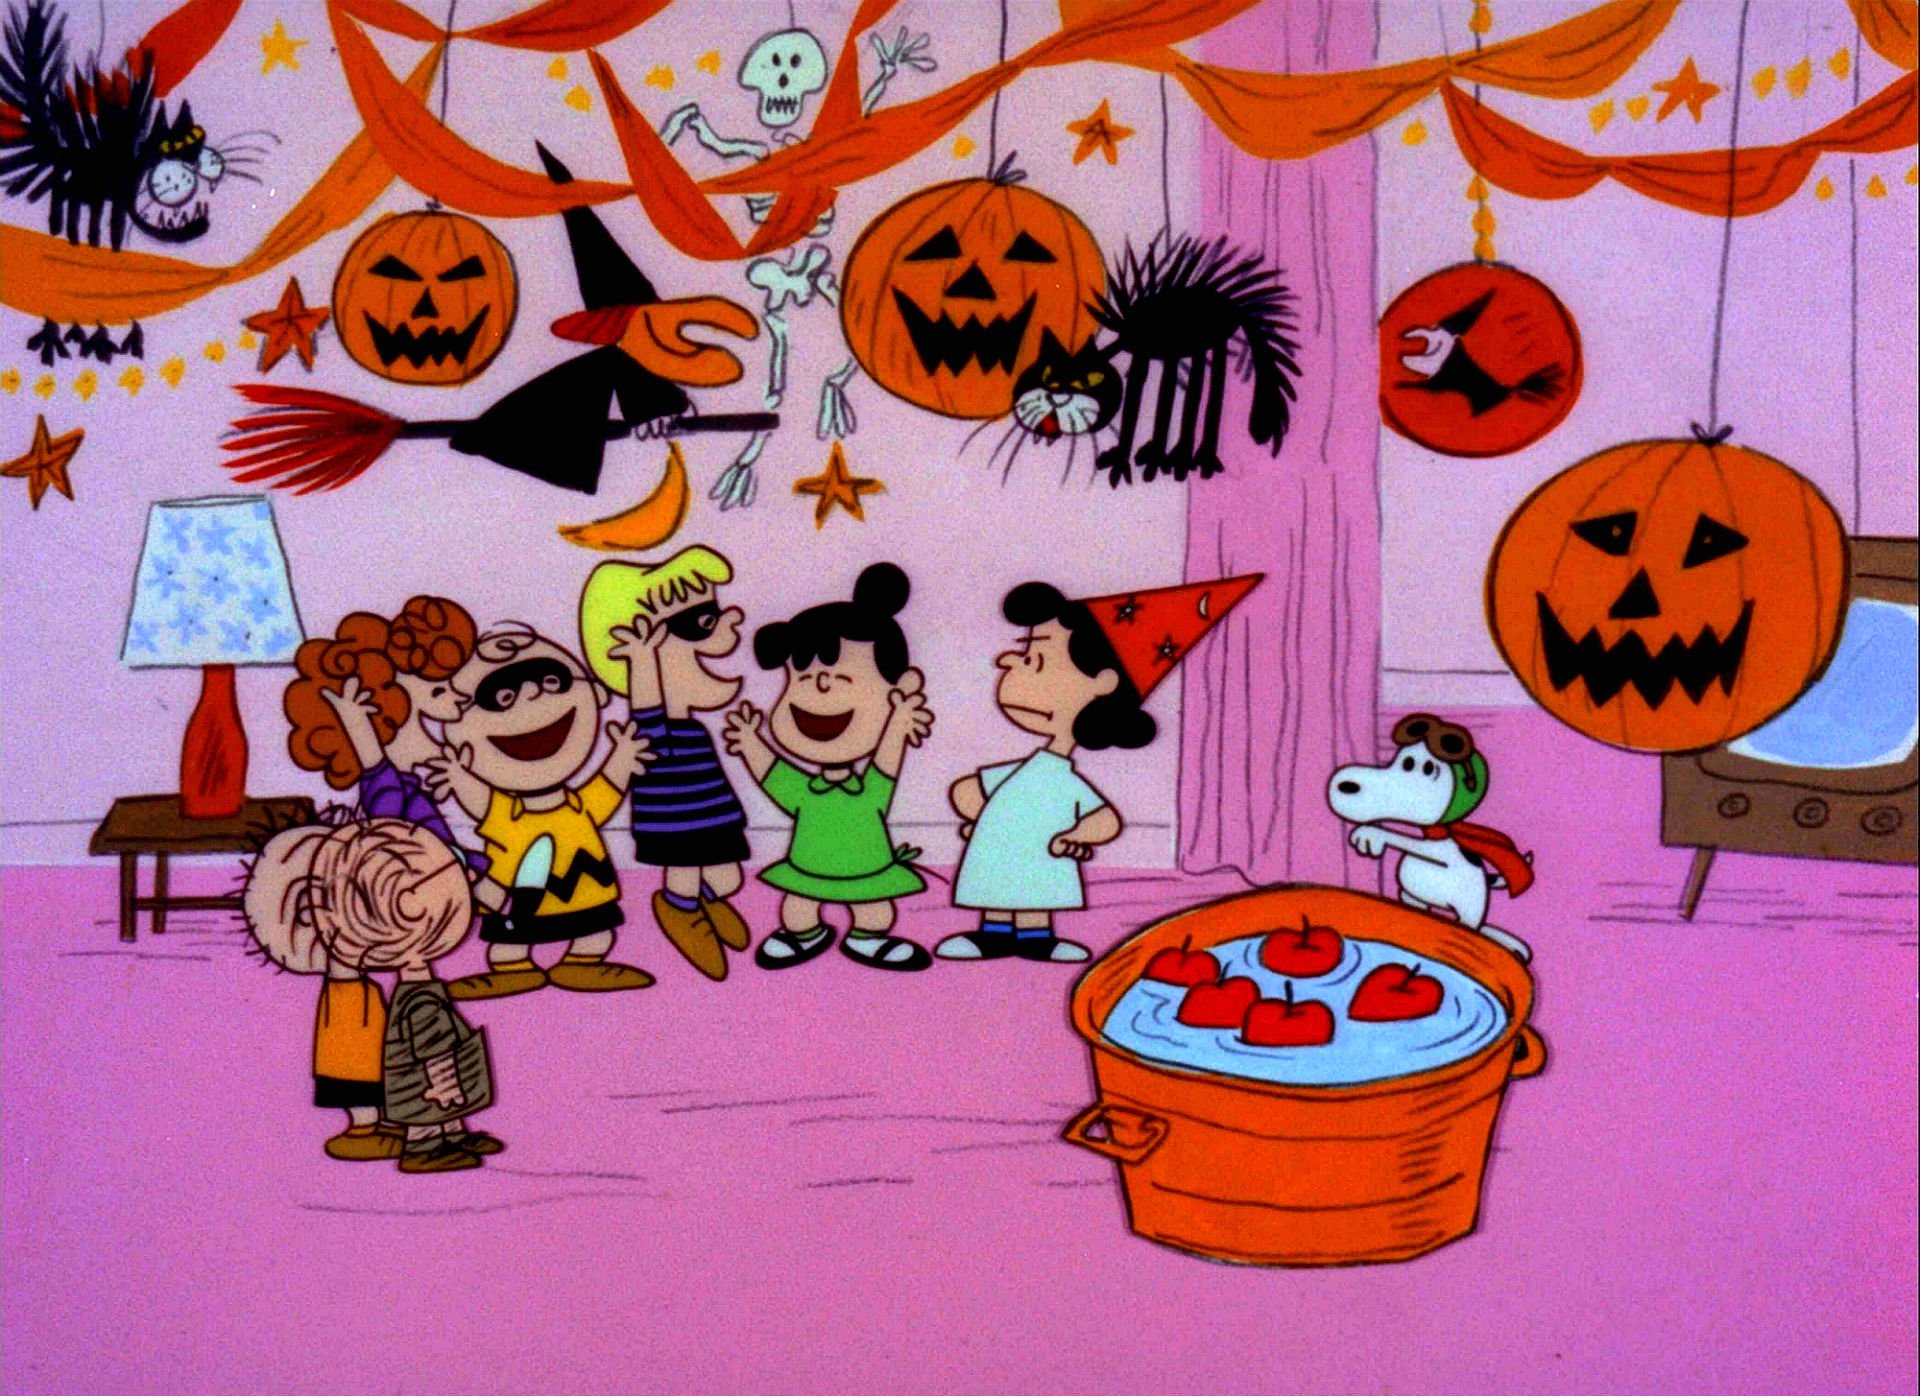 Peanuts' Halloween